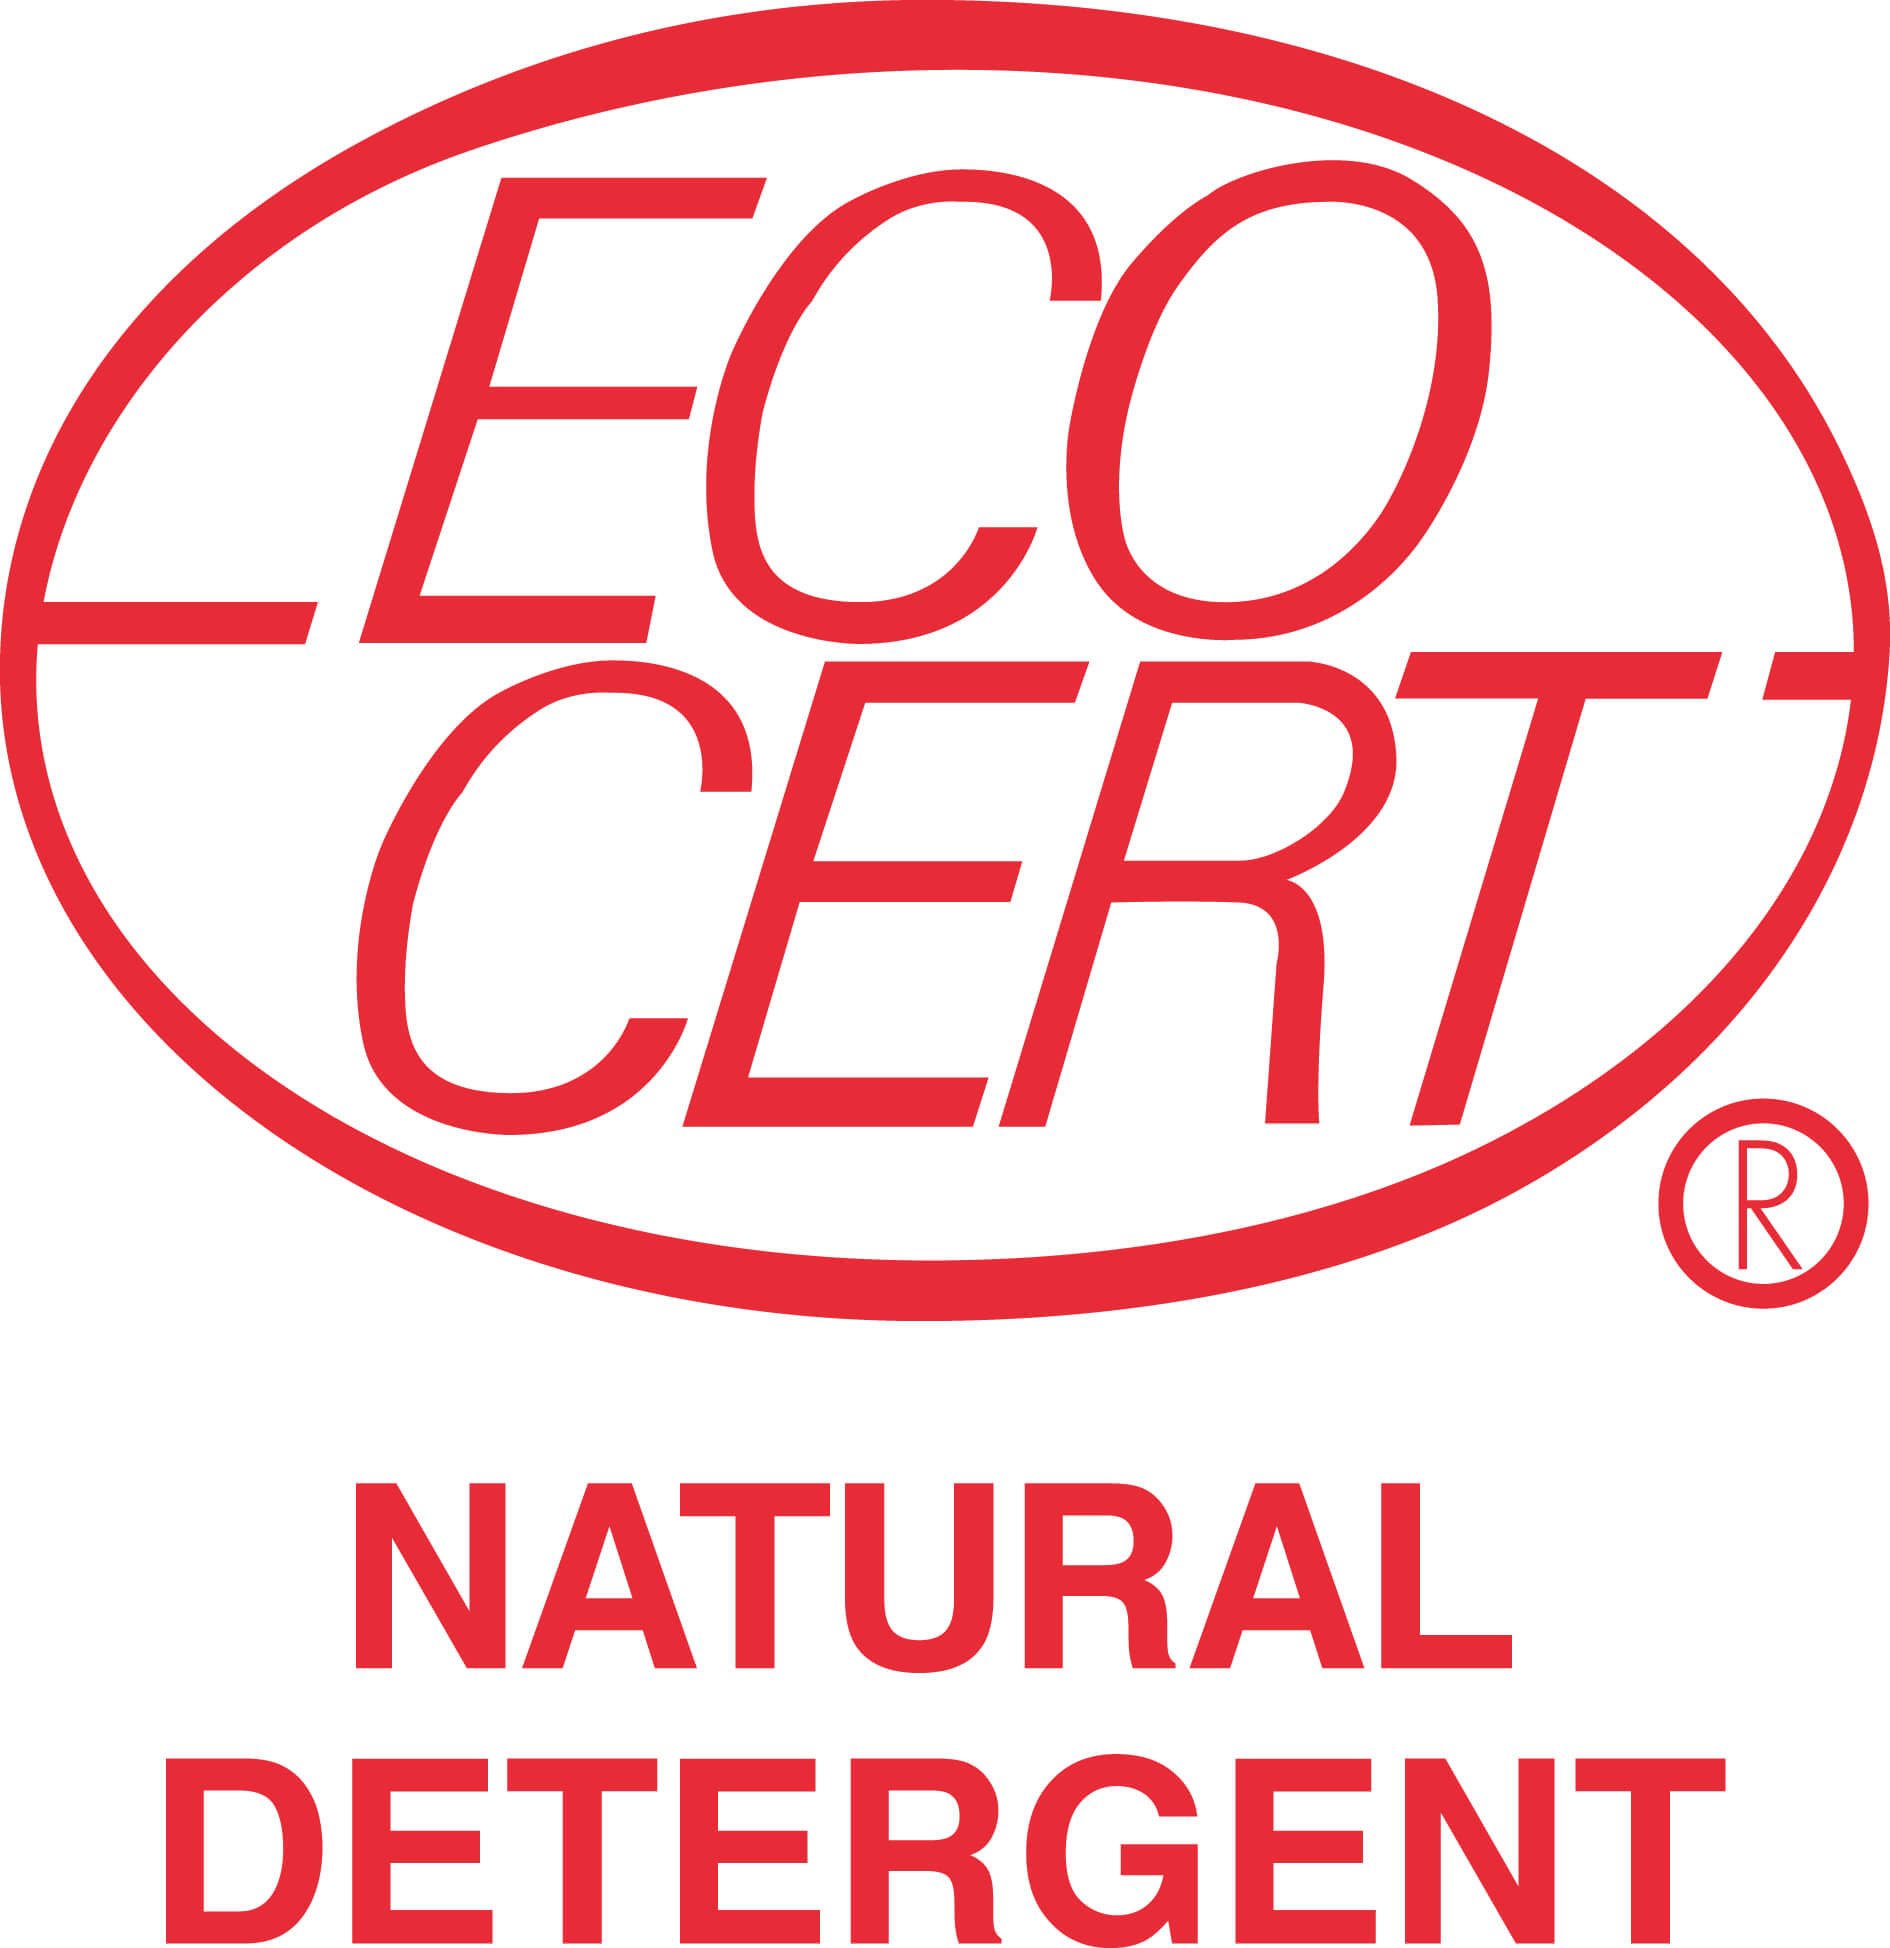 ecocert_natural_detergent.jpg